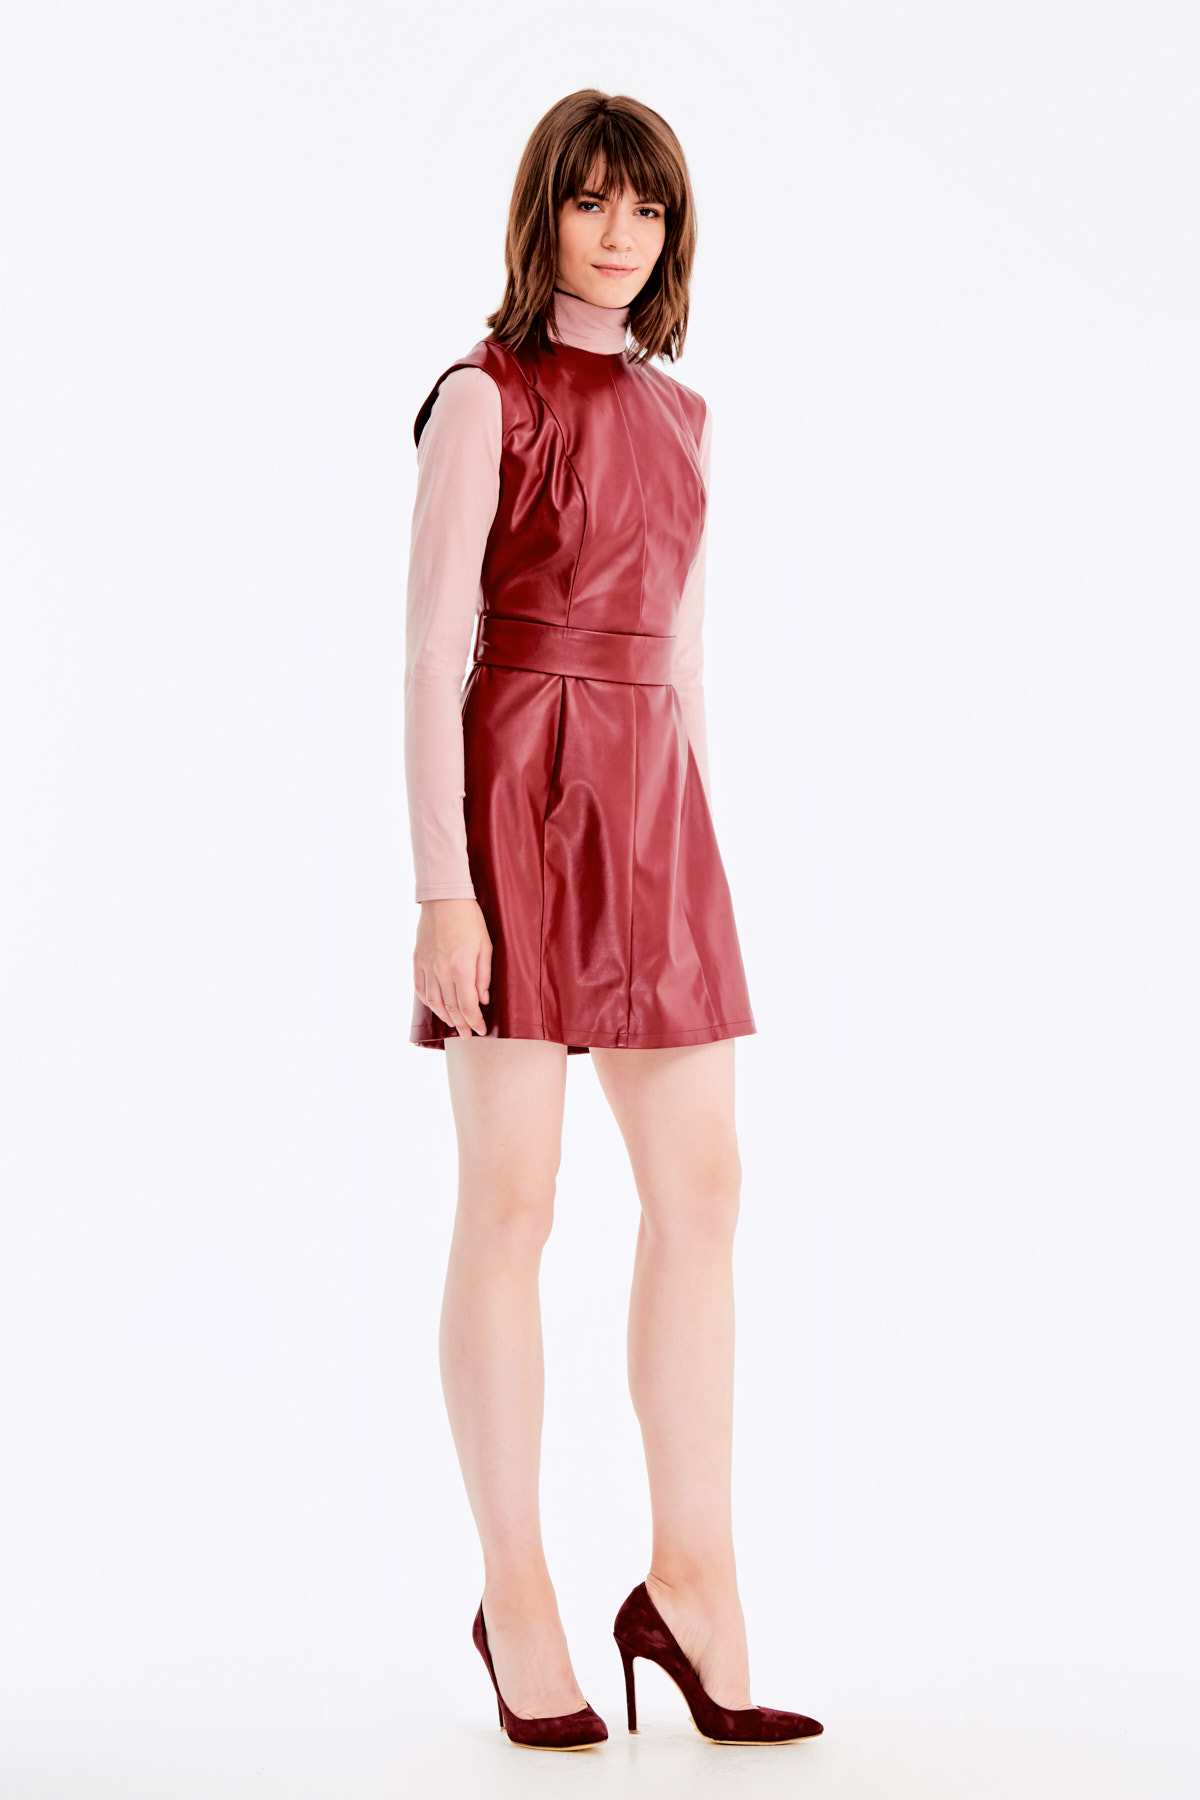 Below-knee burgundy leather dress , photo 5